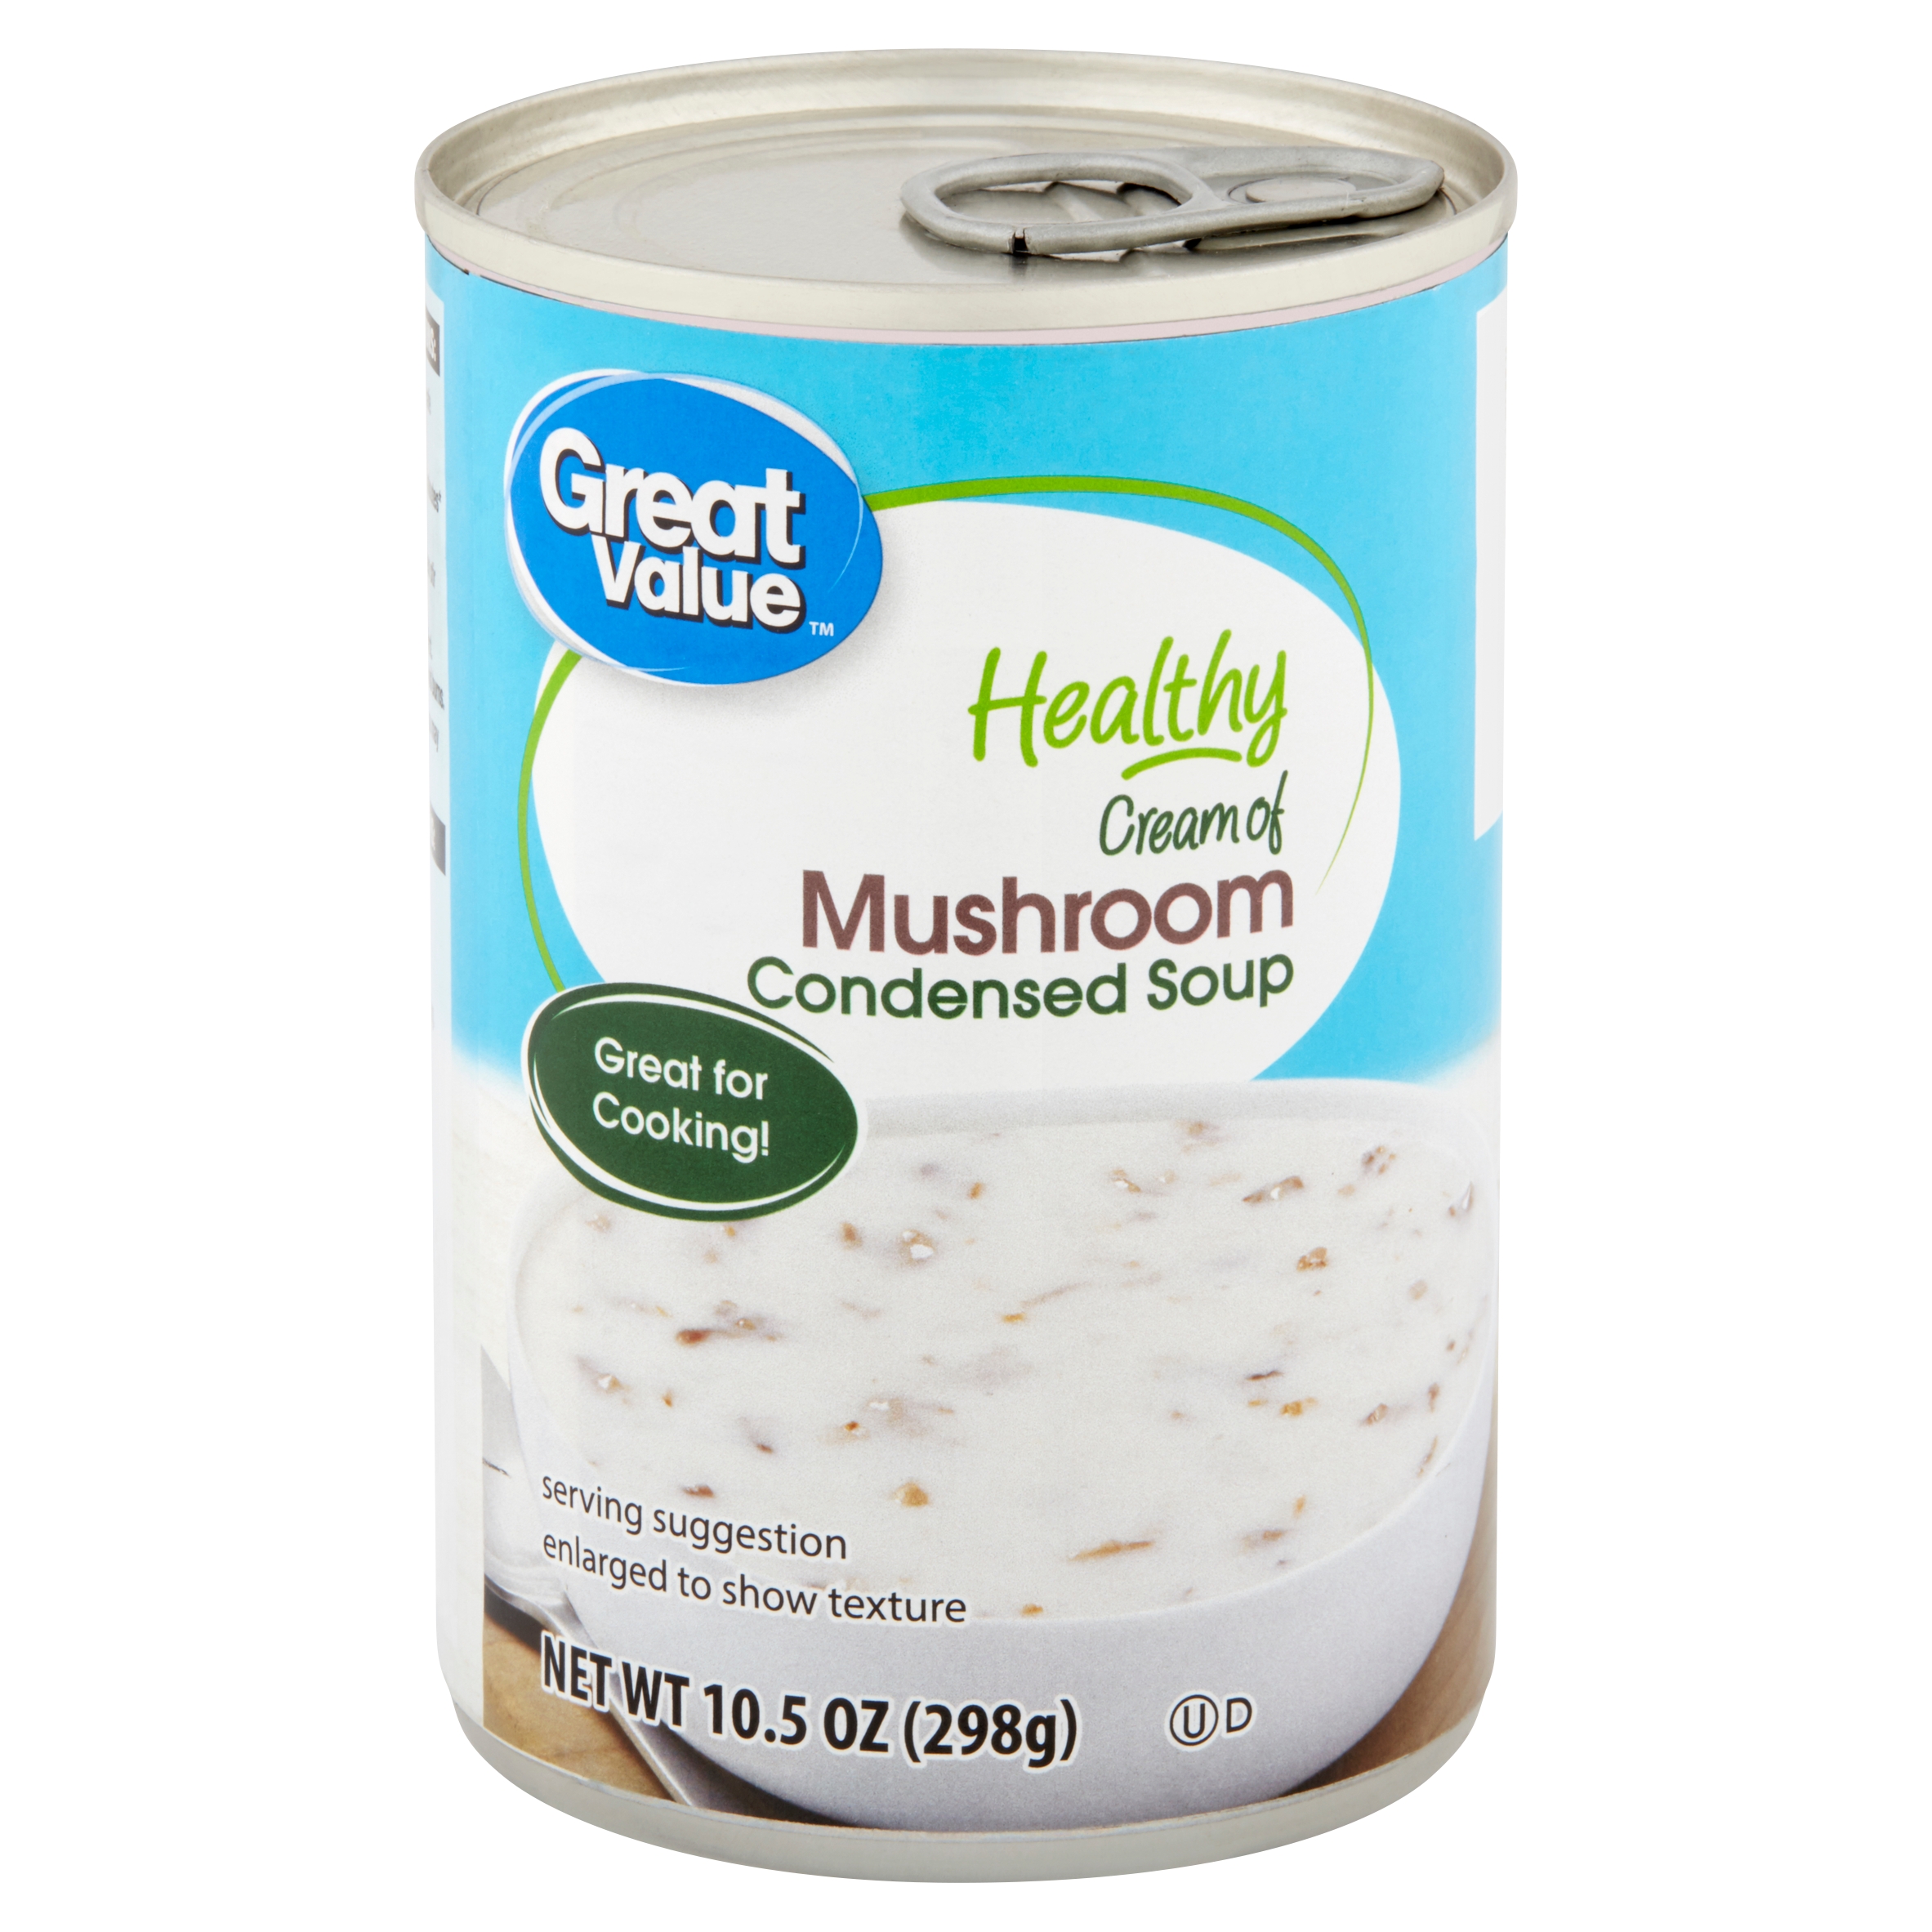 Great Value Healthy Cream of Mushroom Condensed Soup, 10.5 Oz